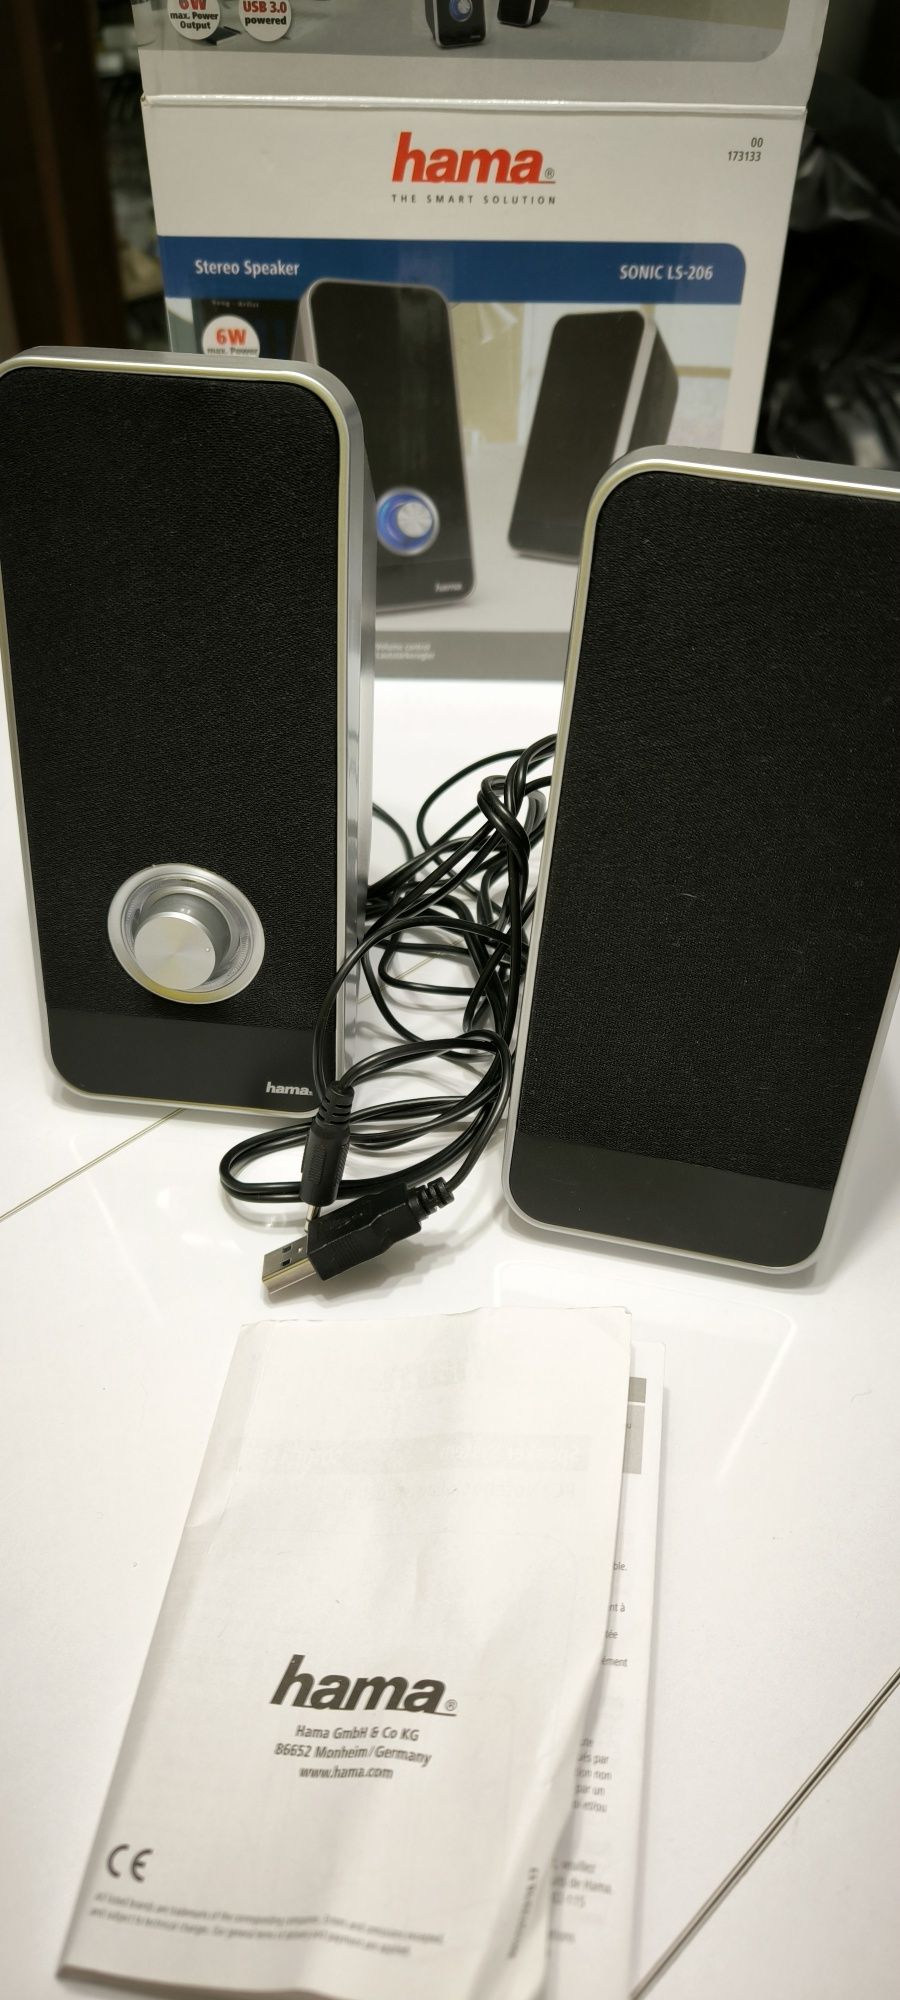 Colunas Stereo Speaker Hama Sonic LS-206 - Novas